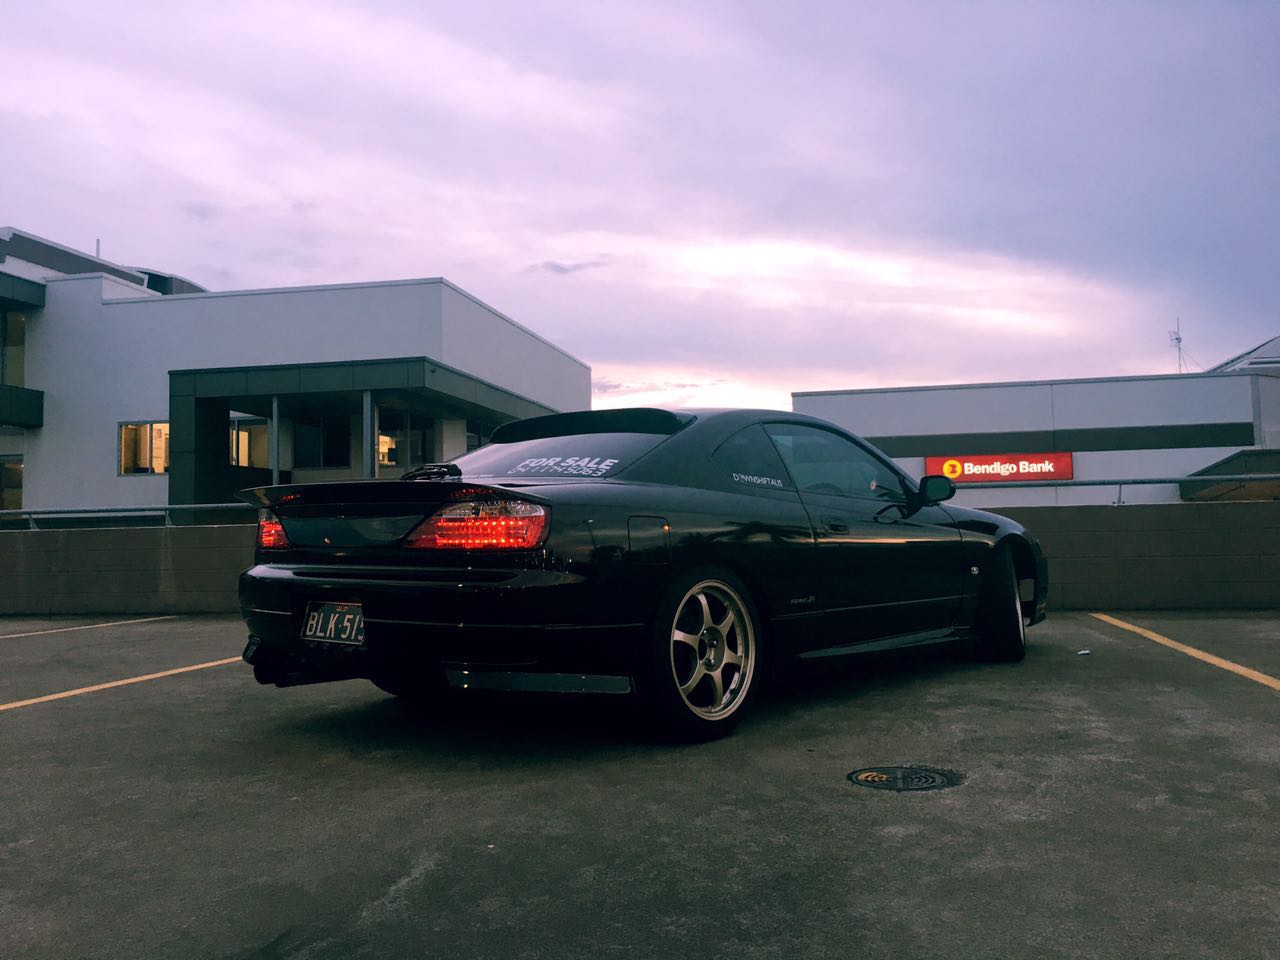 1999 Nissan Silvia